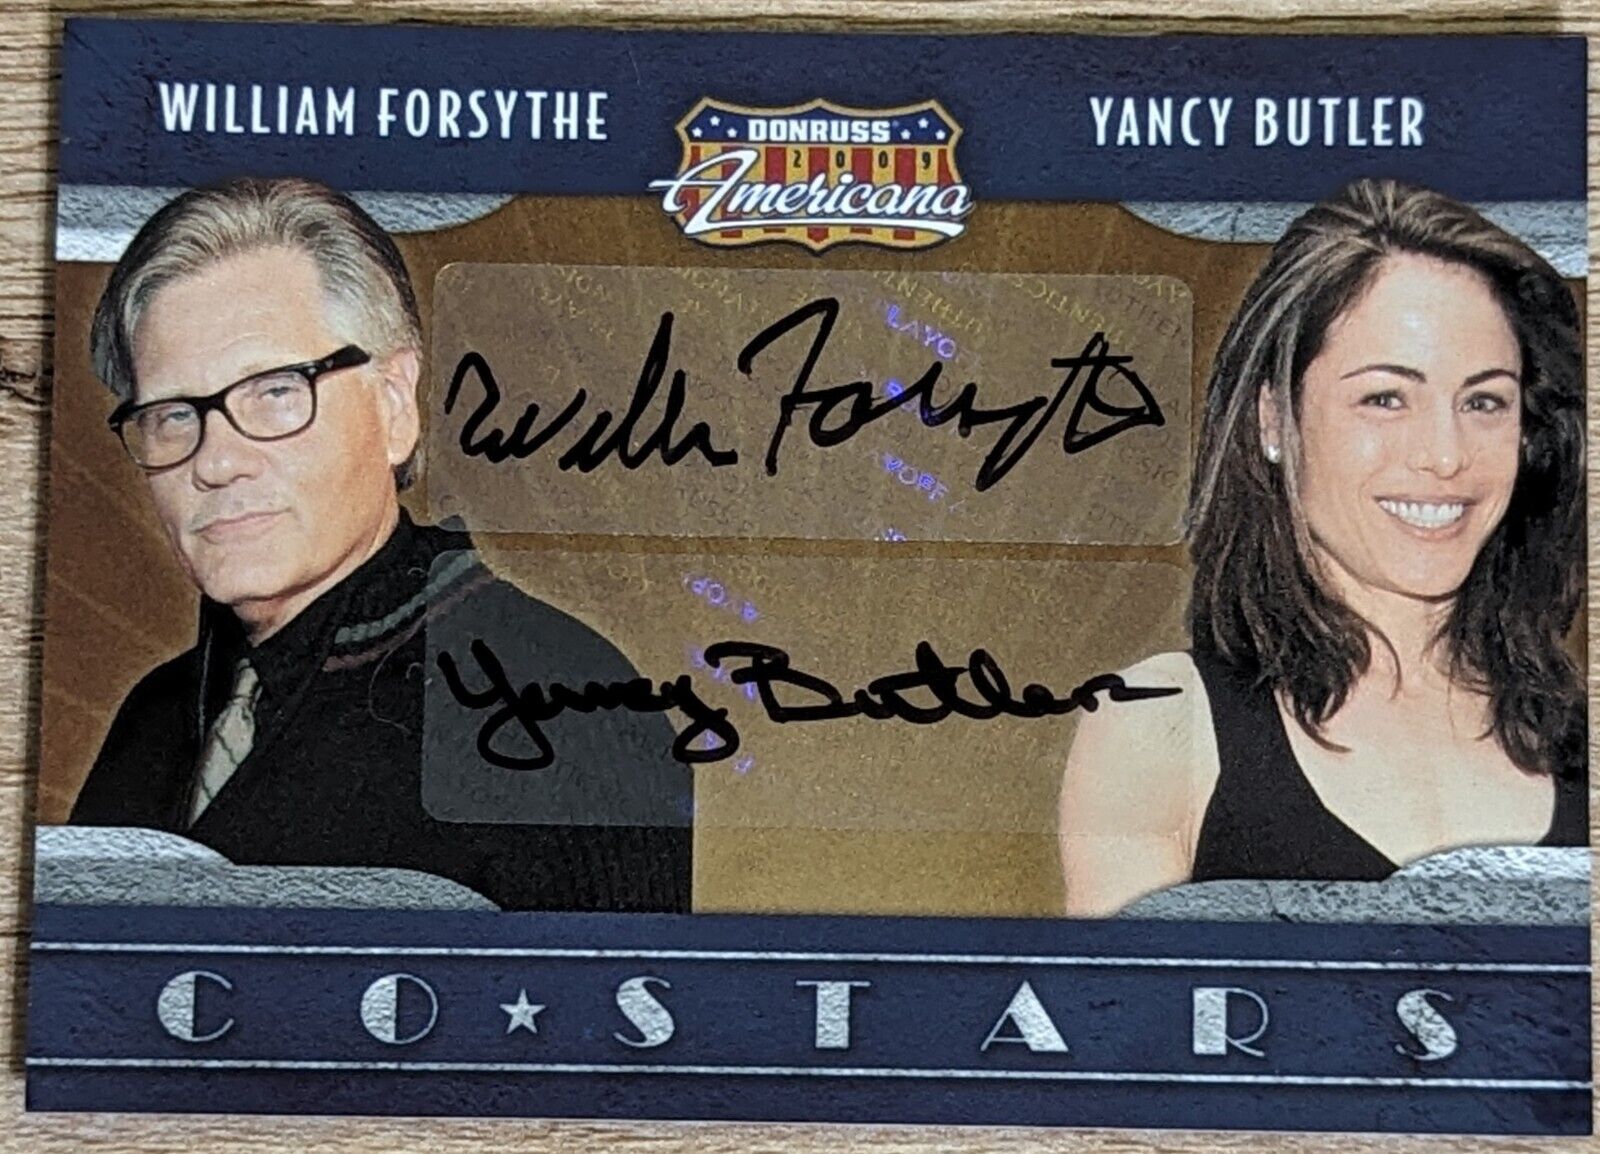 2009 Donruss Americana William Forsythe Yancy Butler Dual Autograph Card 23/25